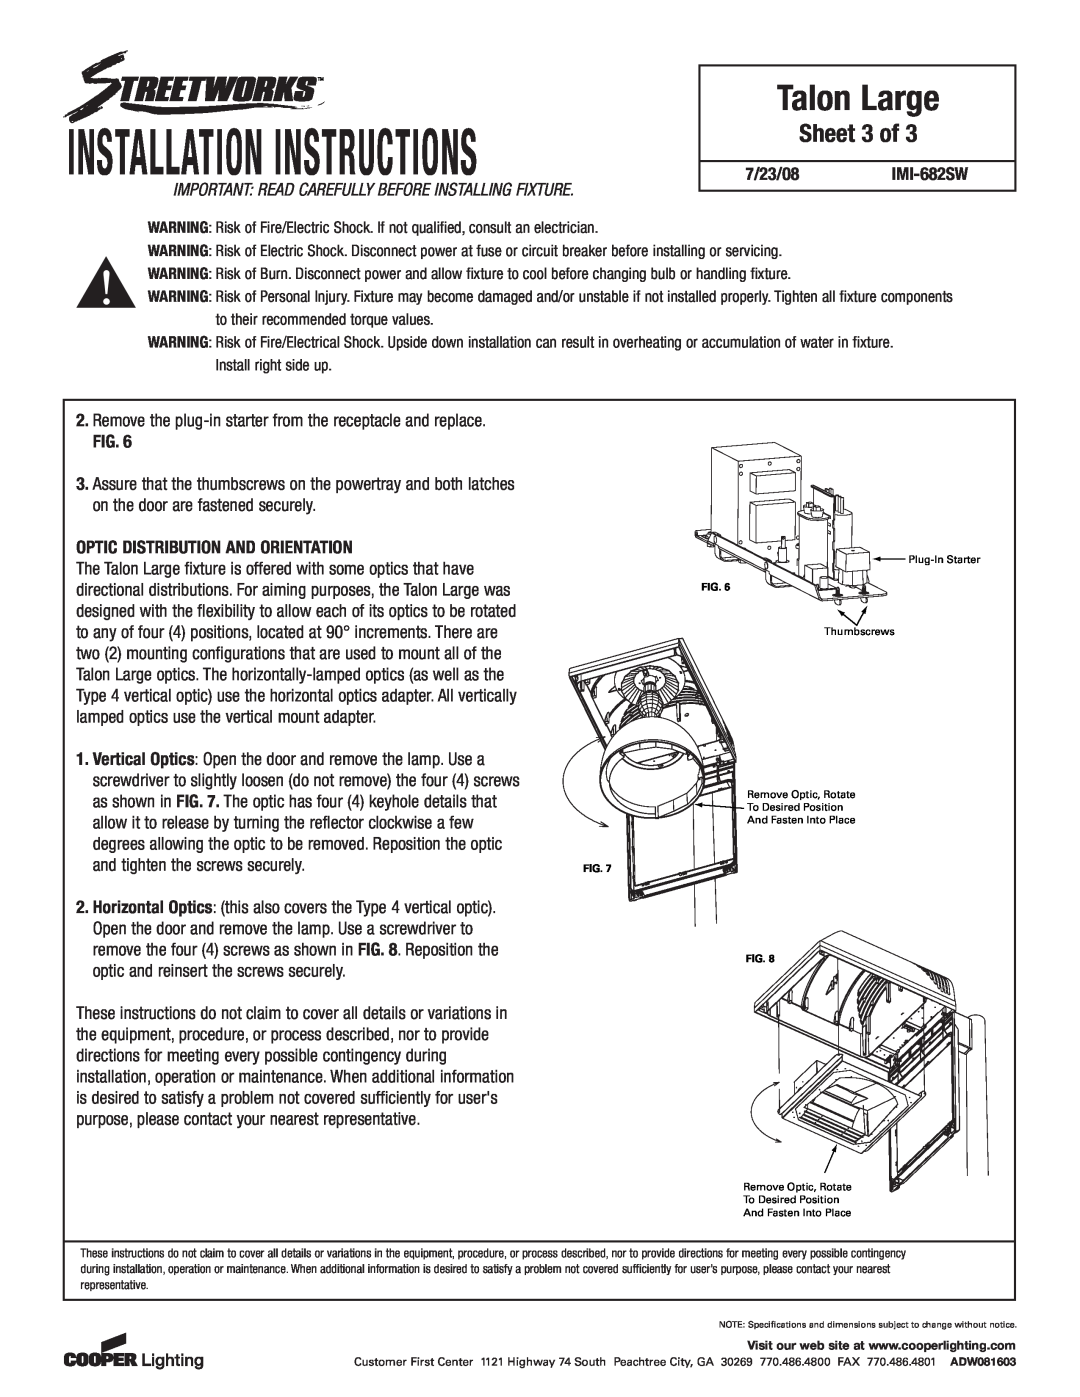 Cooper Lighting IMI-682SW installation instructions Sheet 3 of, Installation Instructions, Talon Large 